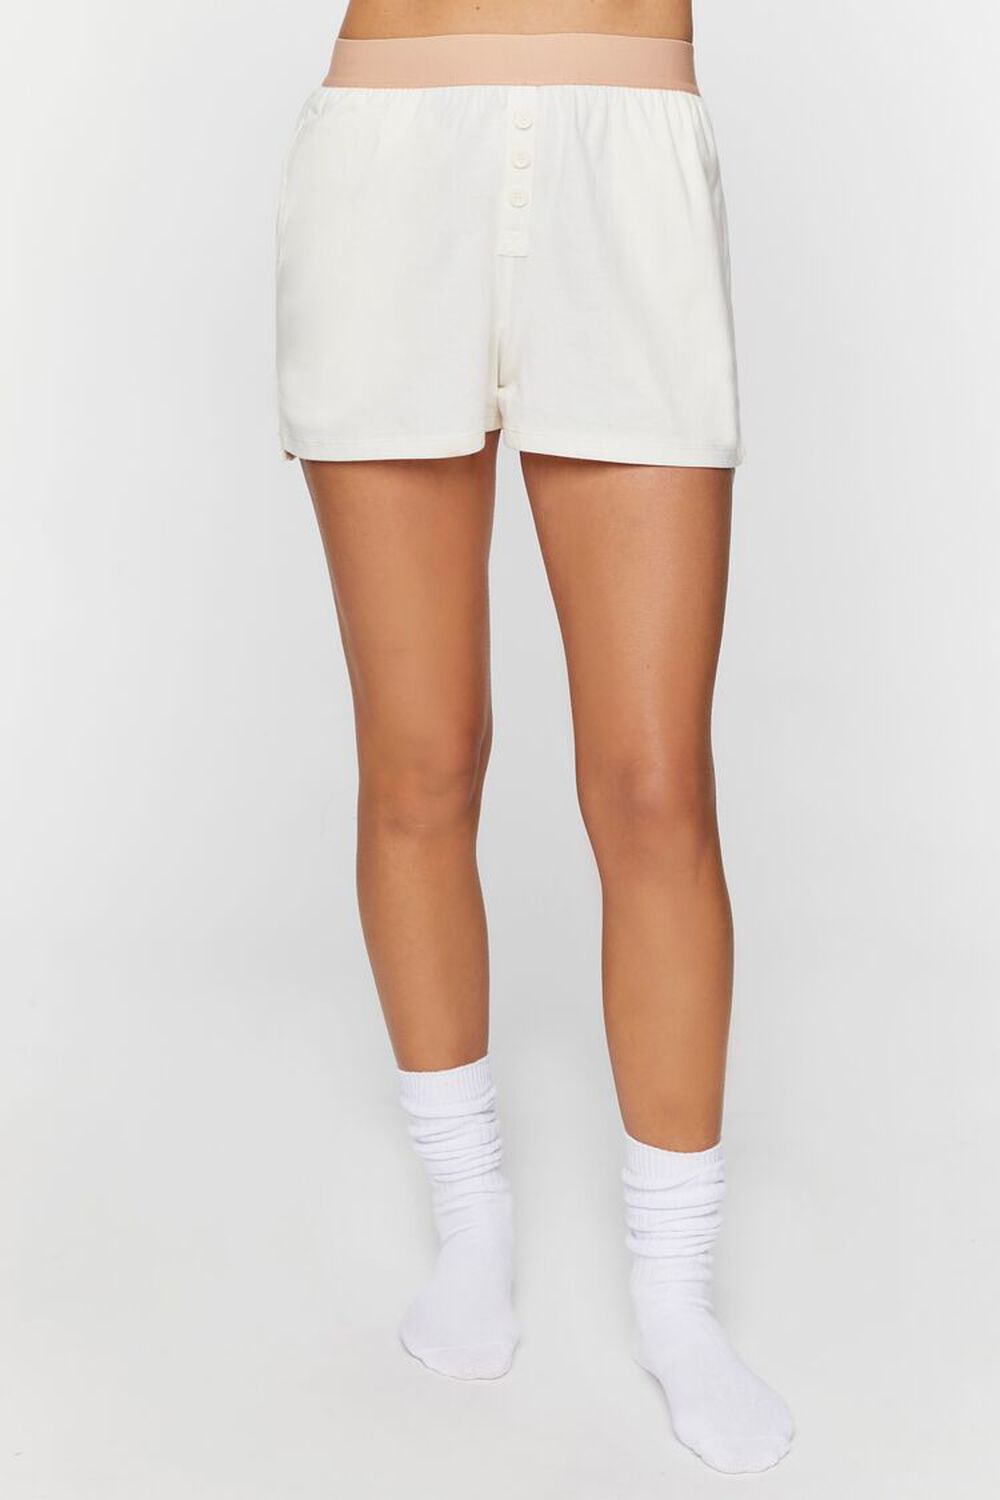 TAN/WHITE Colorblock Button-Front Pajama Shorts, image 2